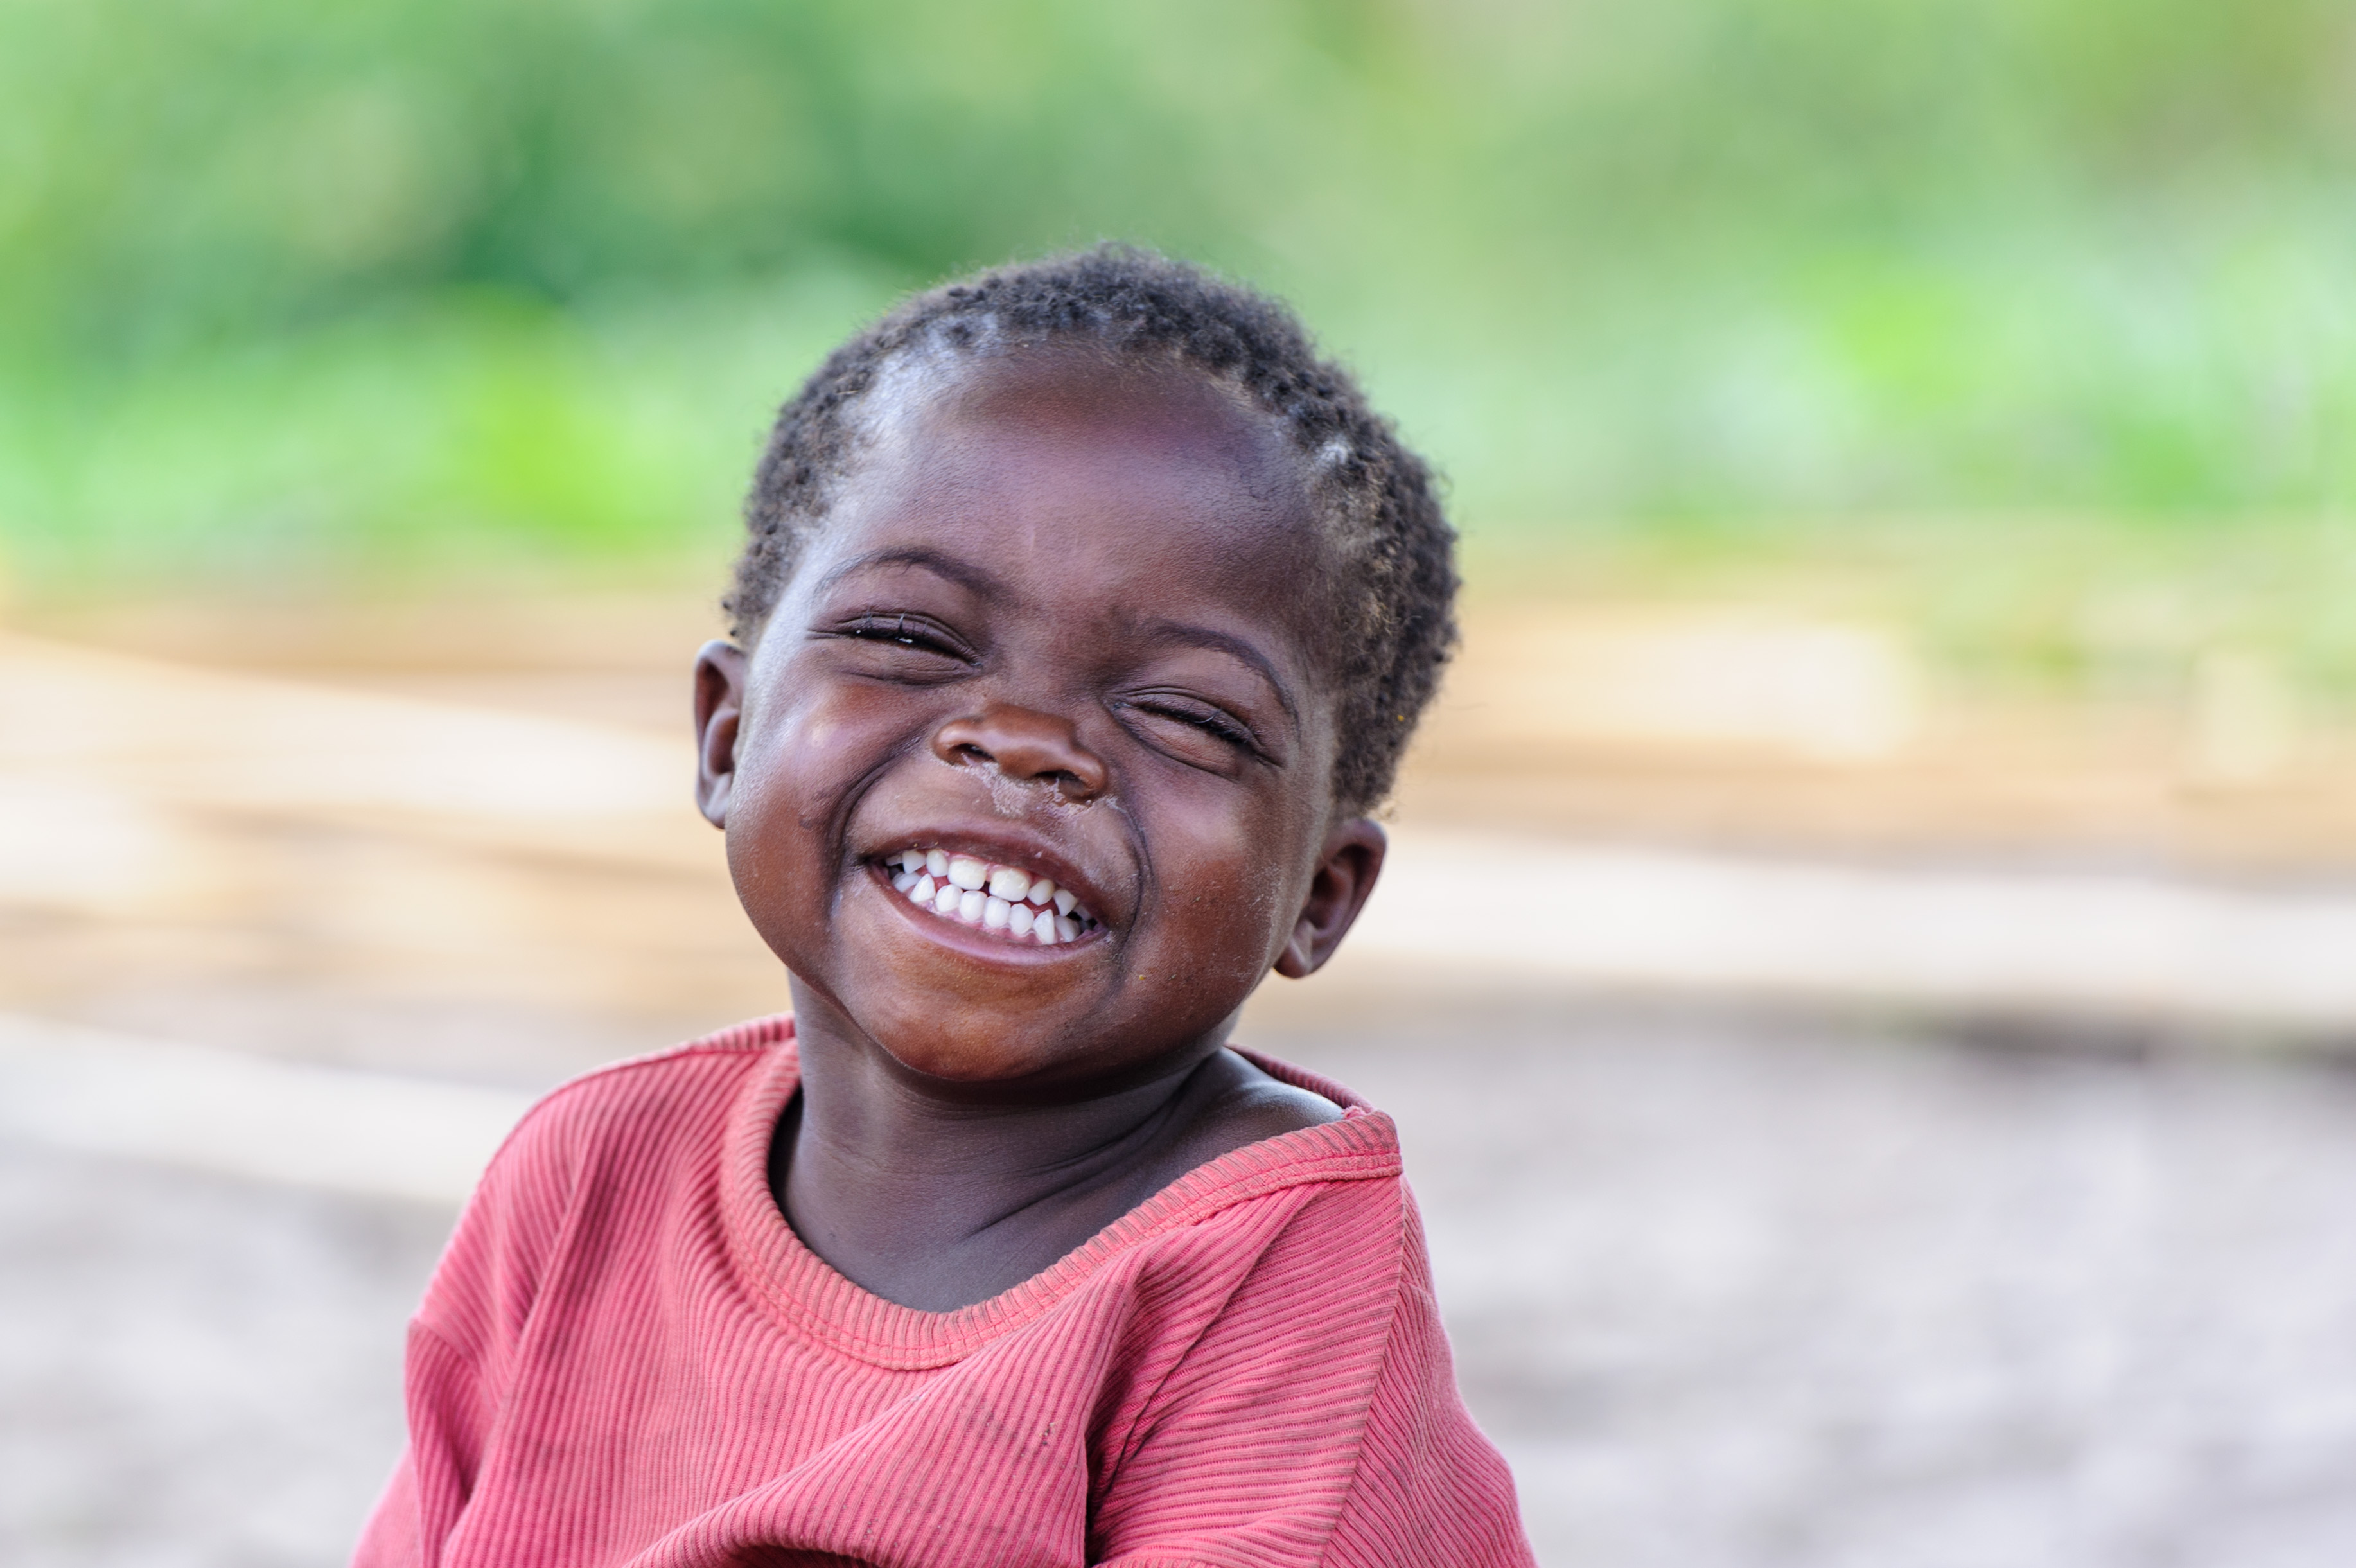 Image of smiling child